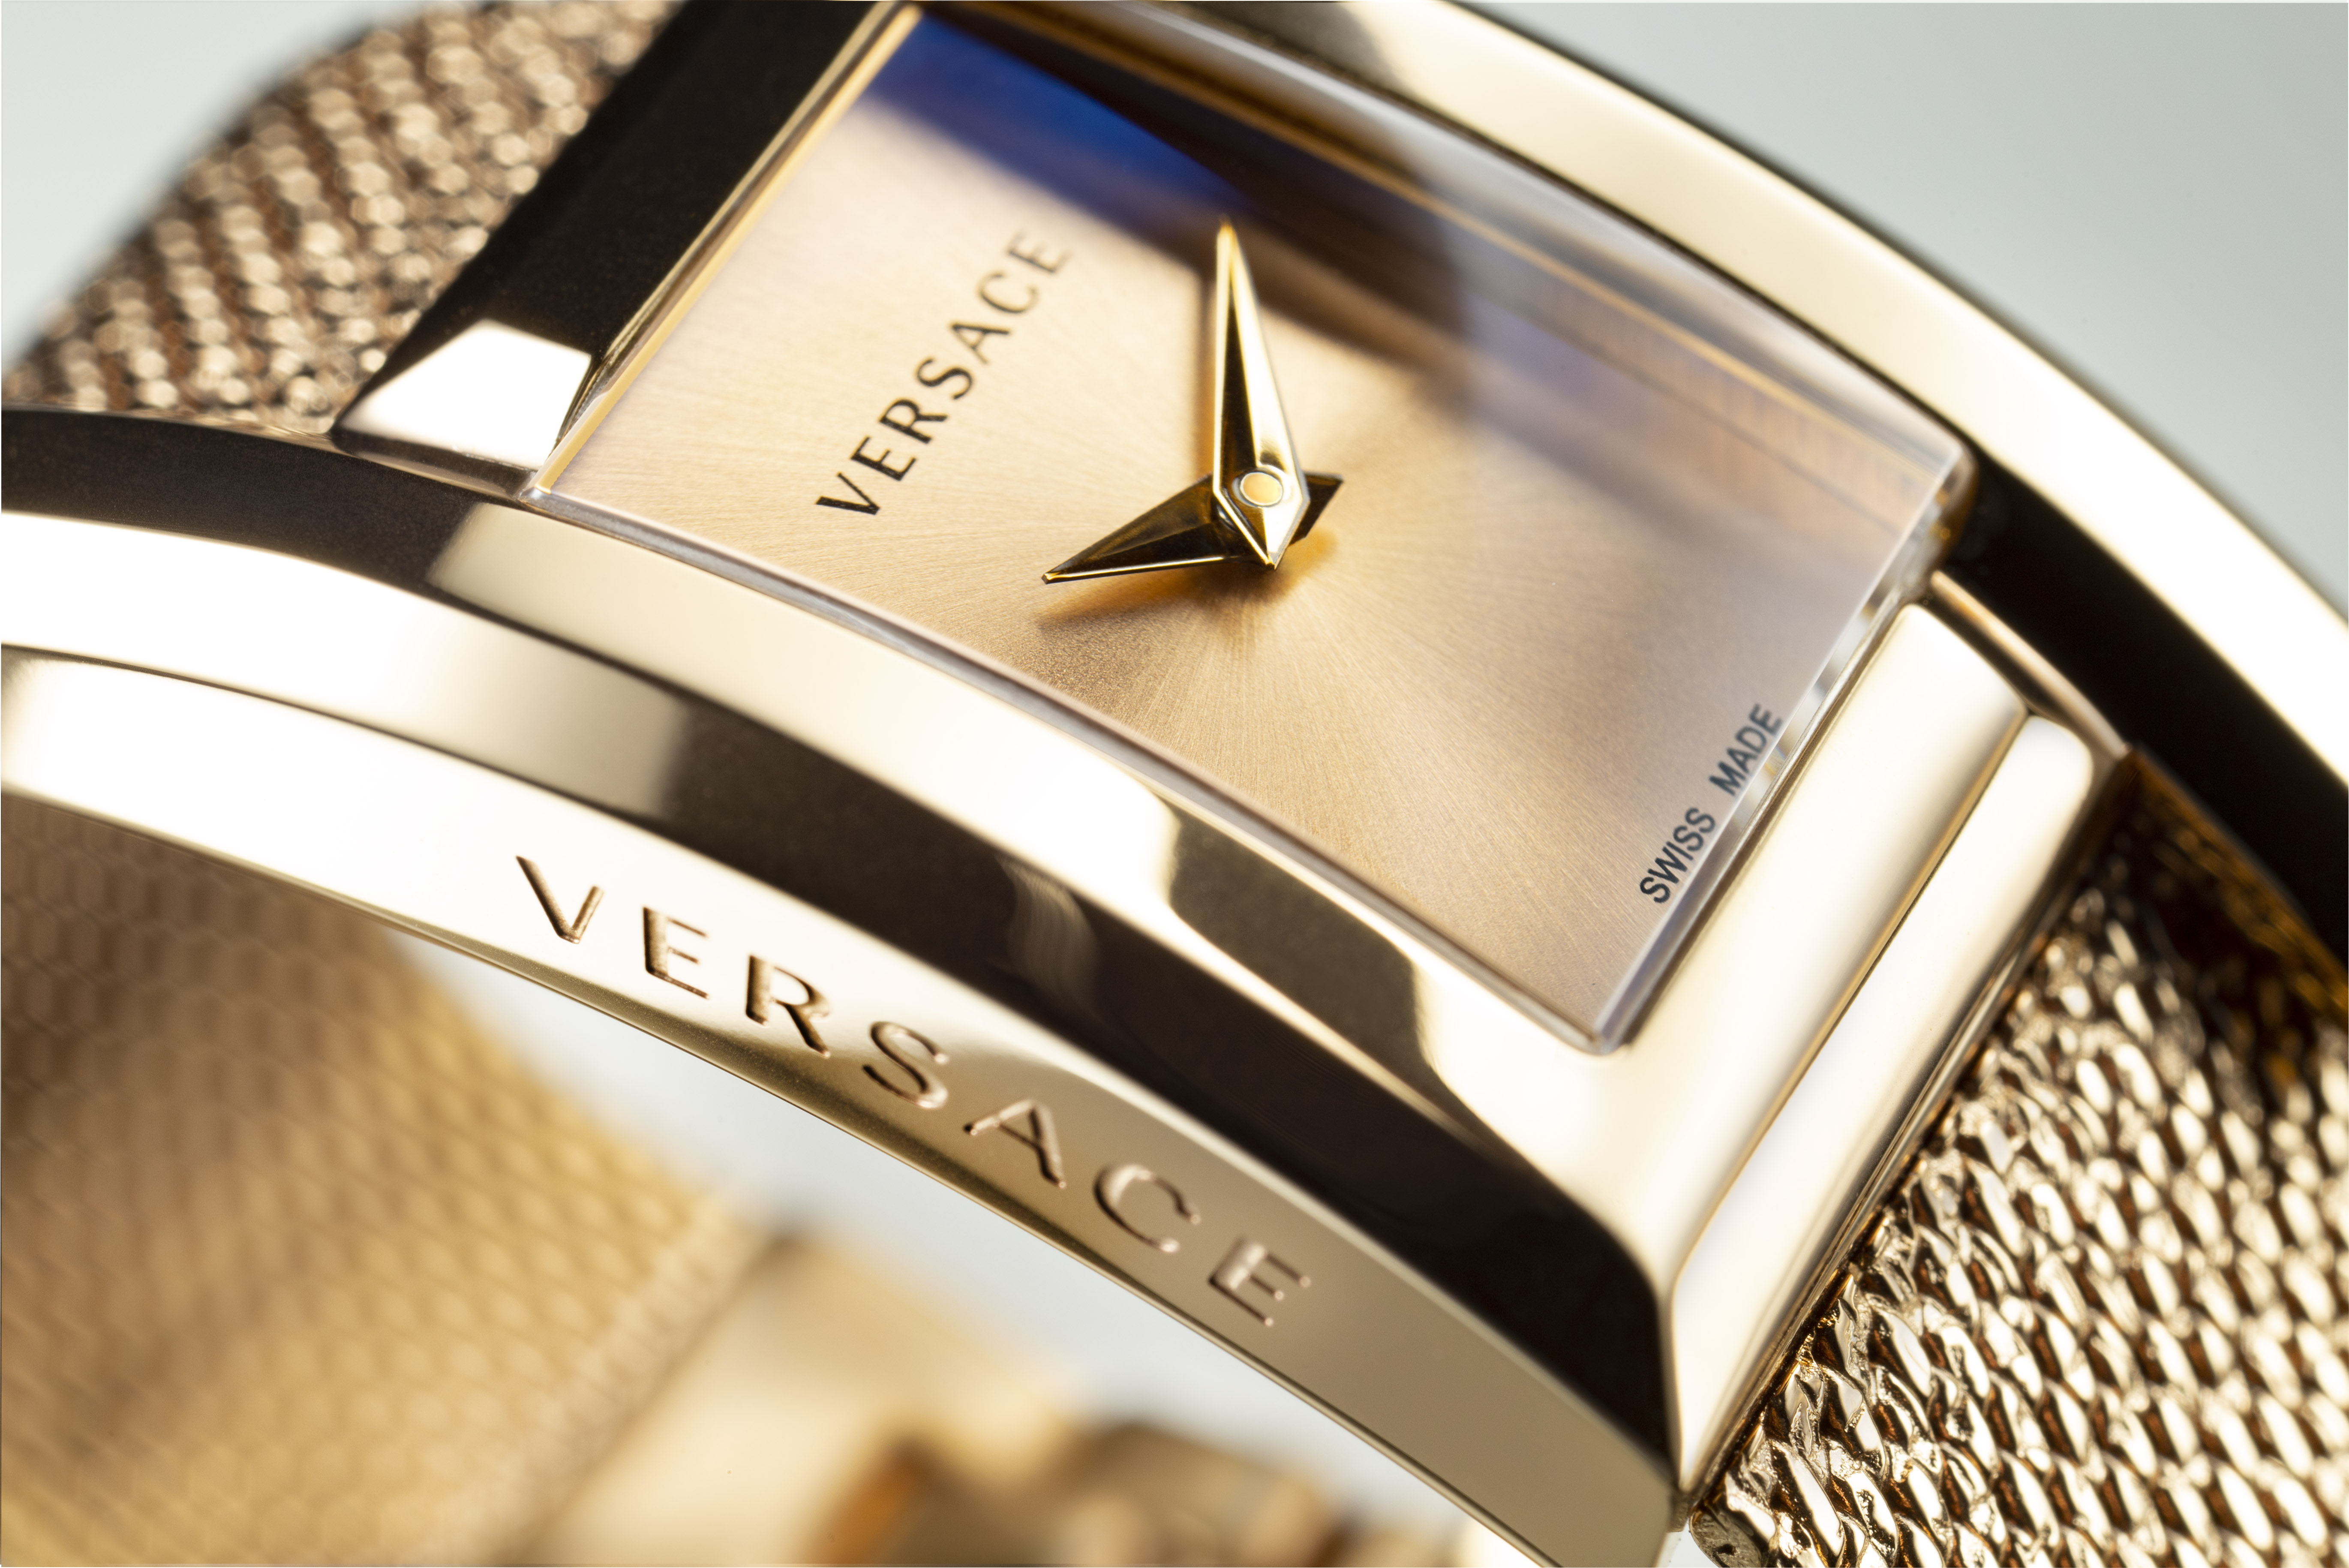 versace watches usa